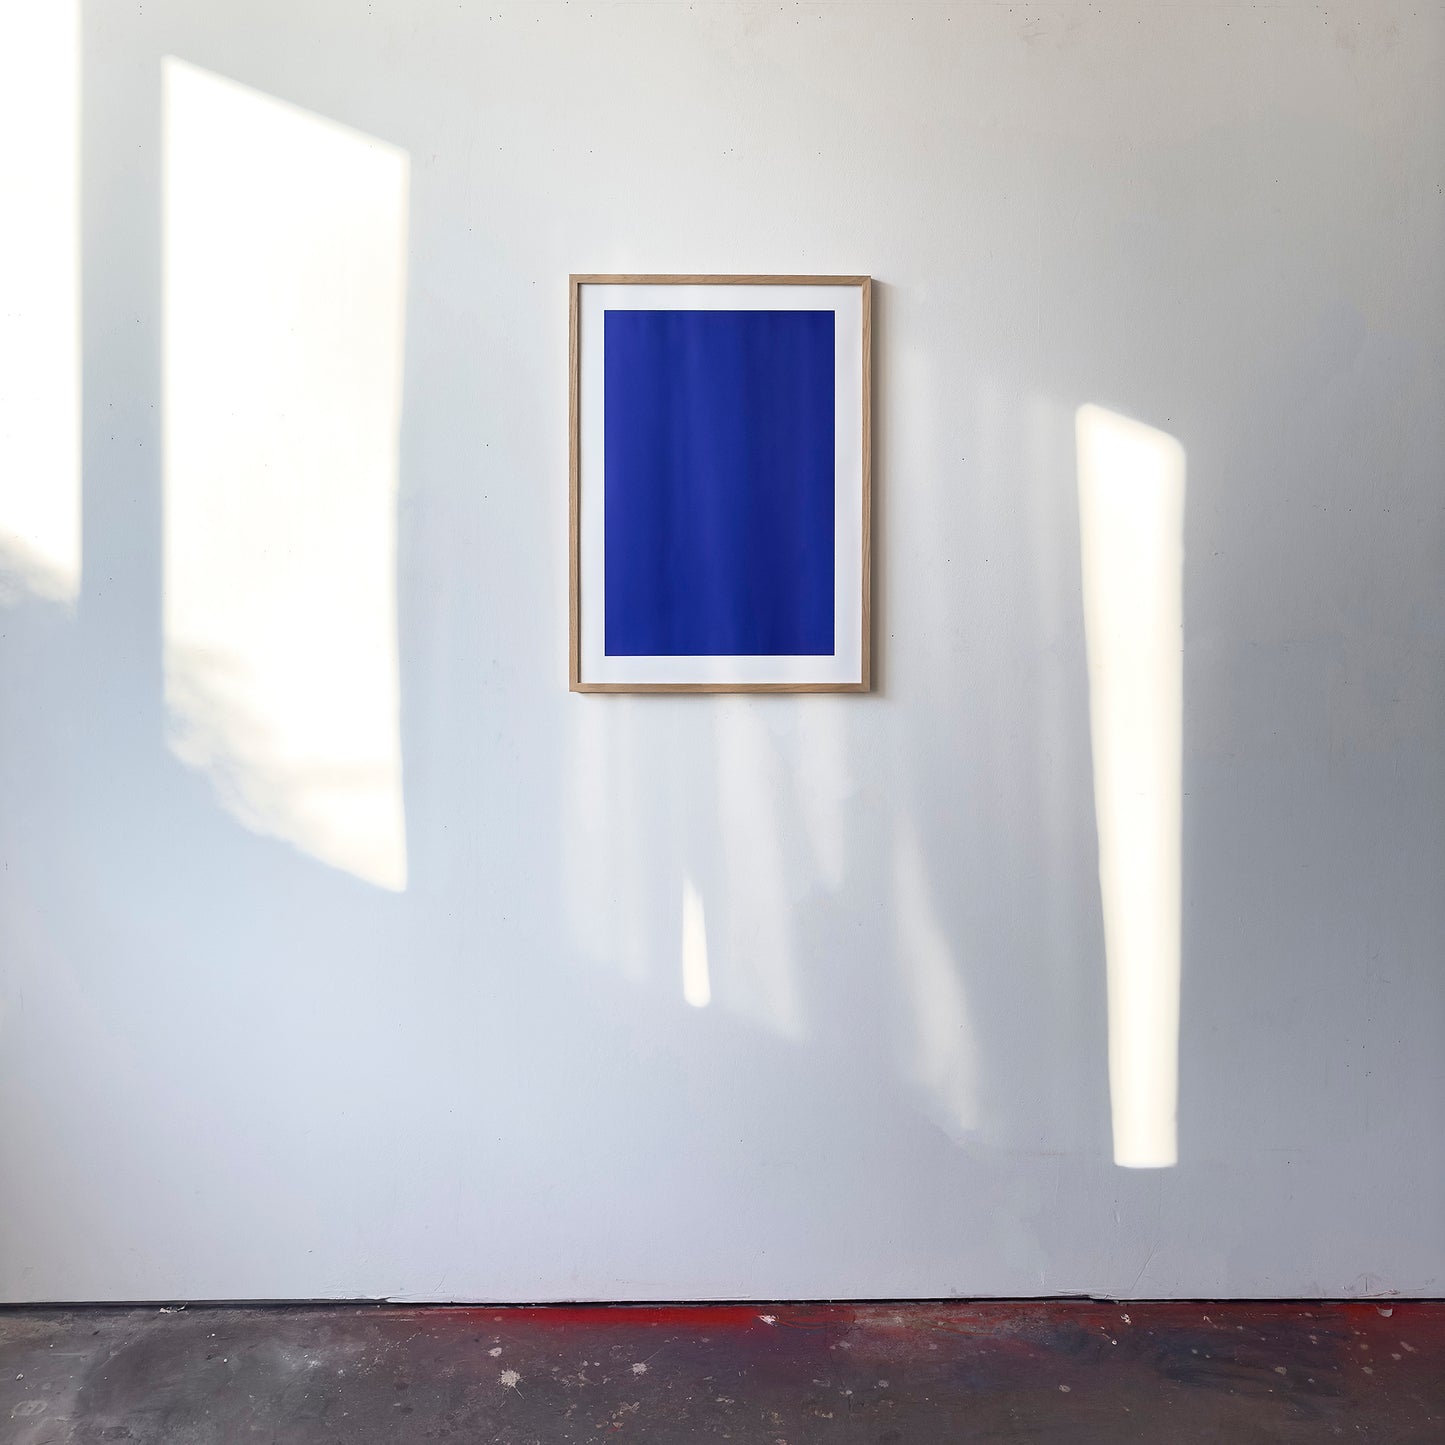 Kunstdruck im Bilderrahmen im Atelier, Motiv blau monochrome Welle, Titel IKB II